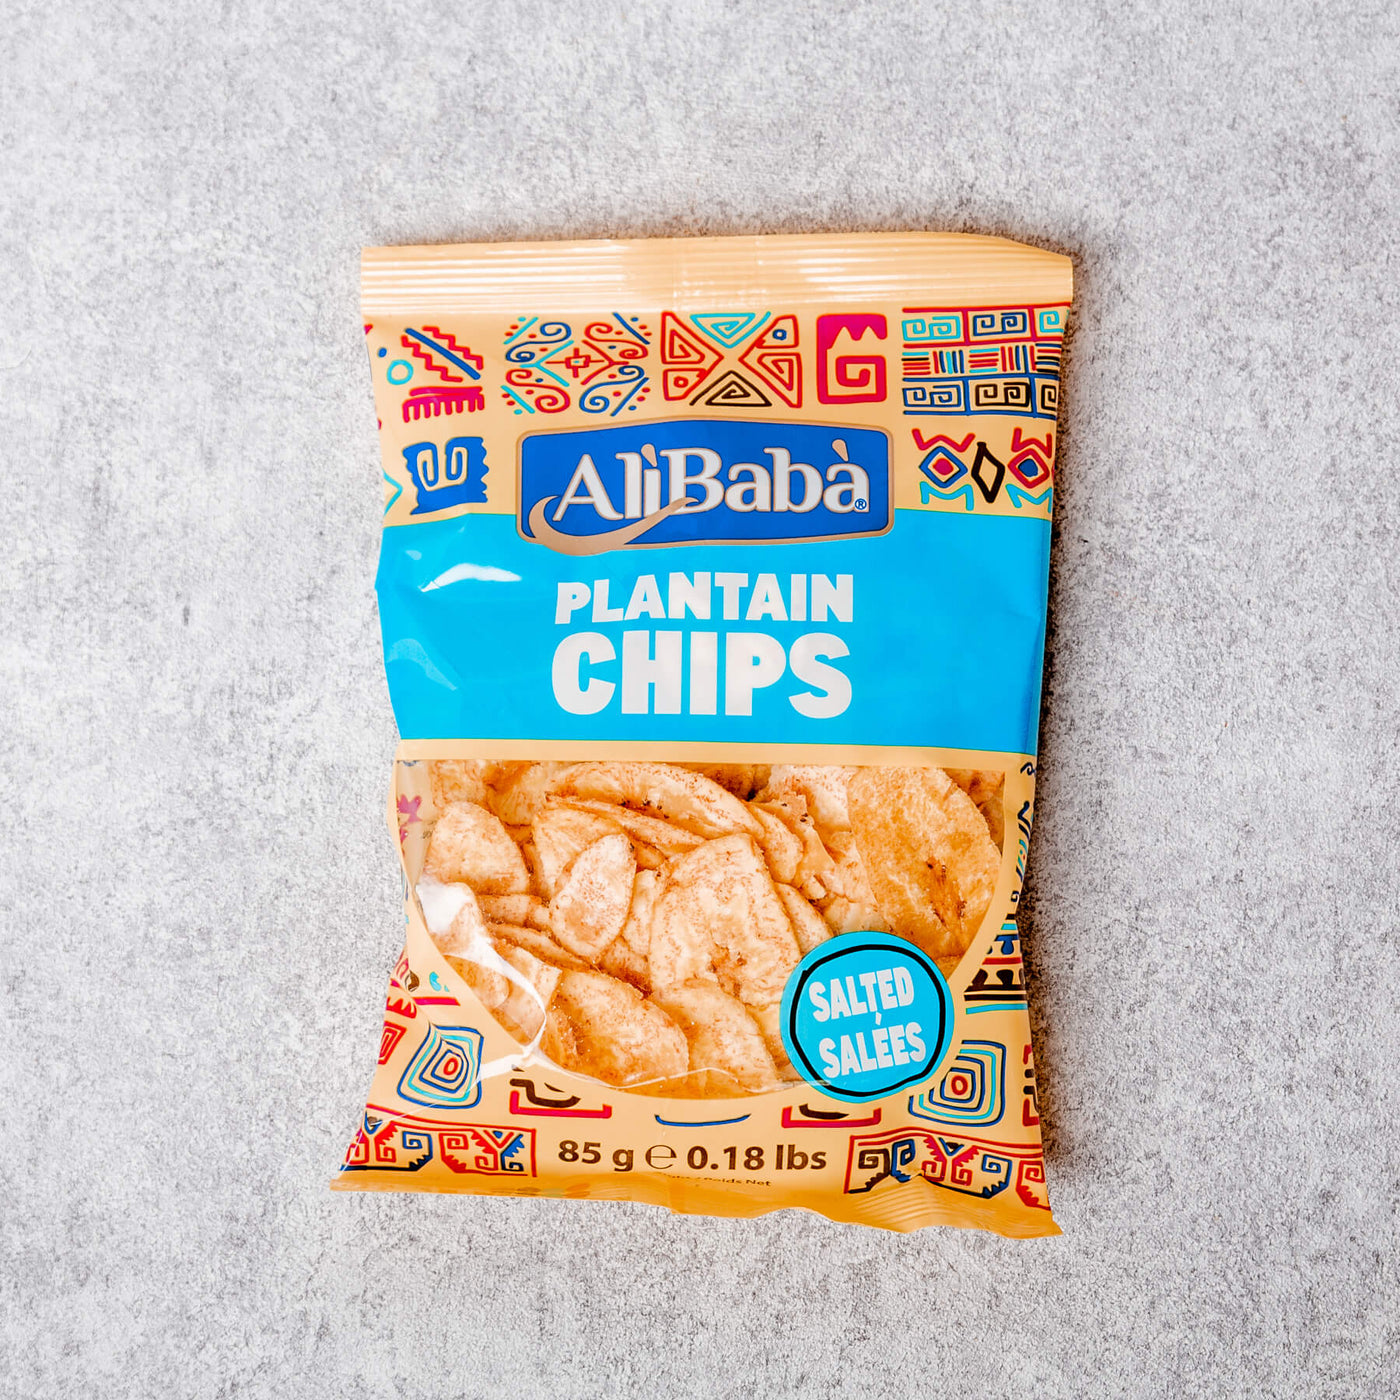 Alibaba - Kochbanenchips(salted)